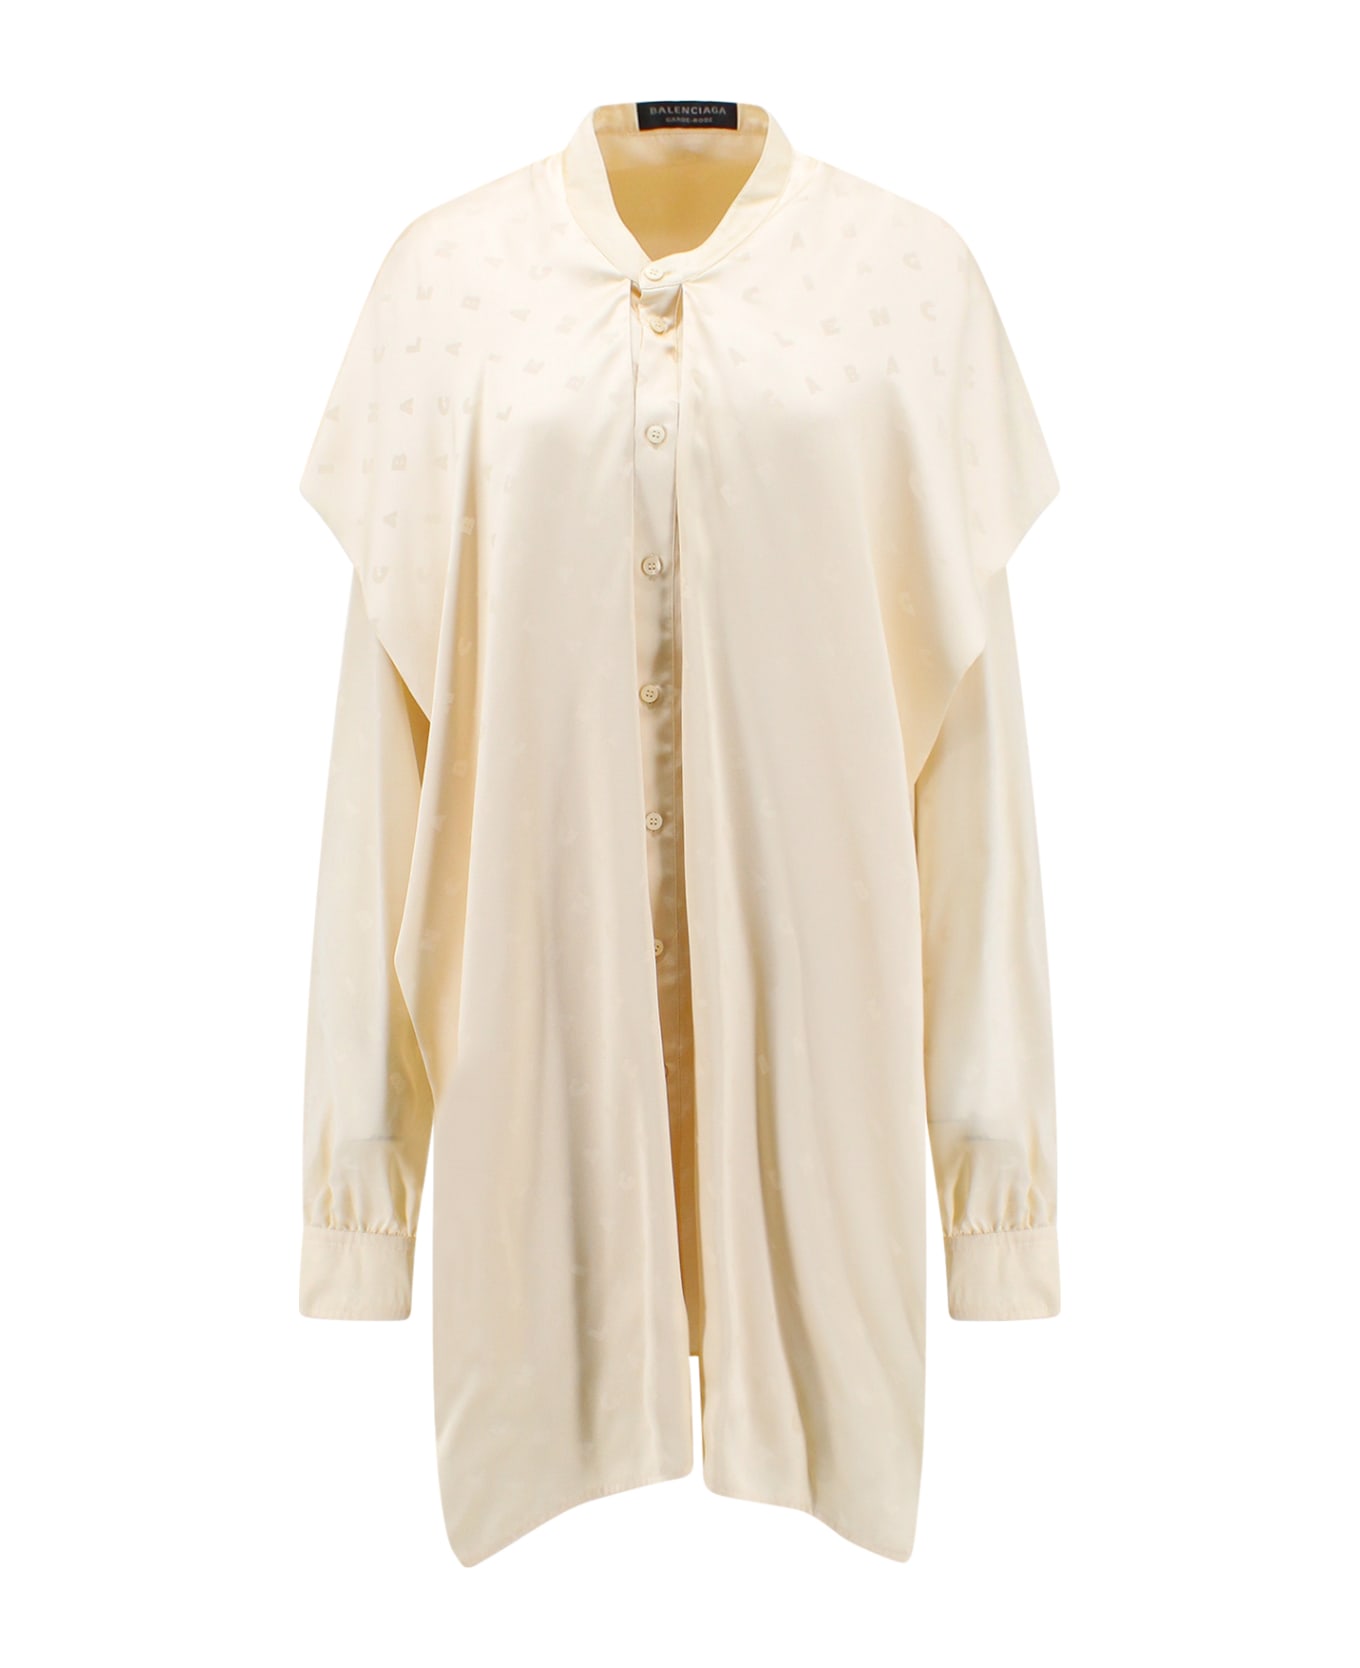 Balenciaga Shirt - White